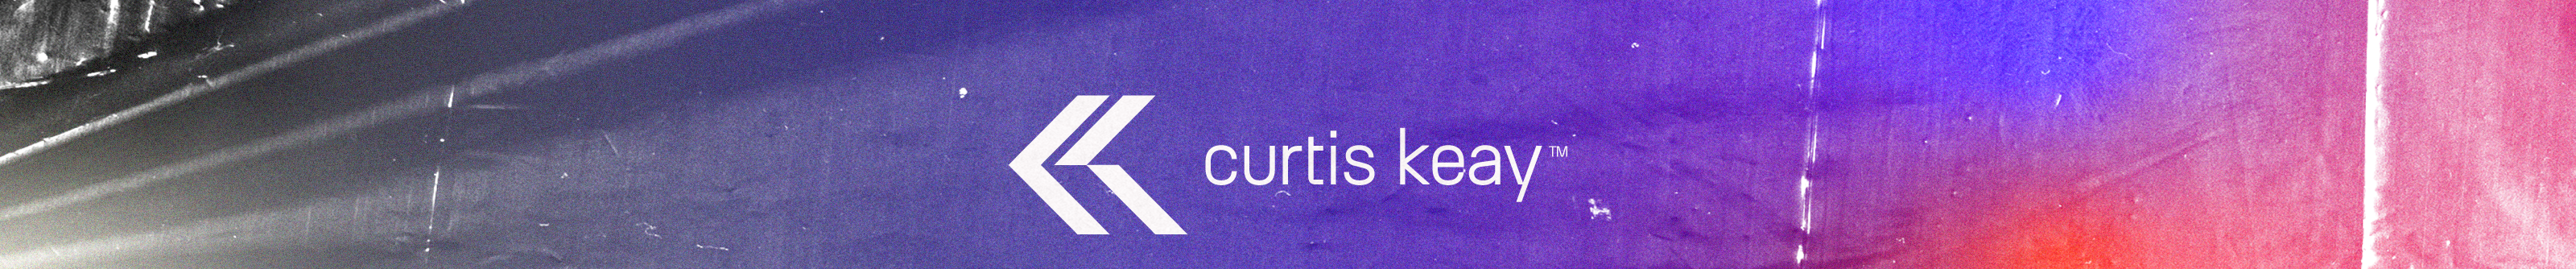 Curtis Keays profilbanner